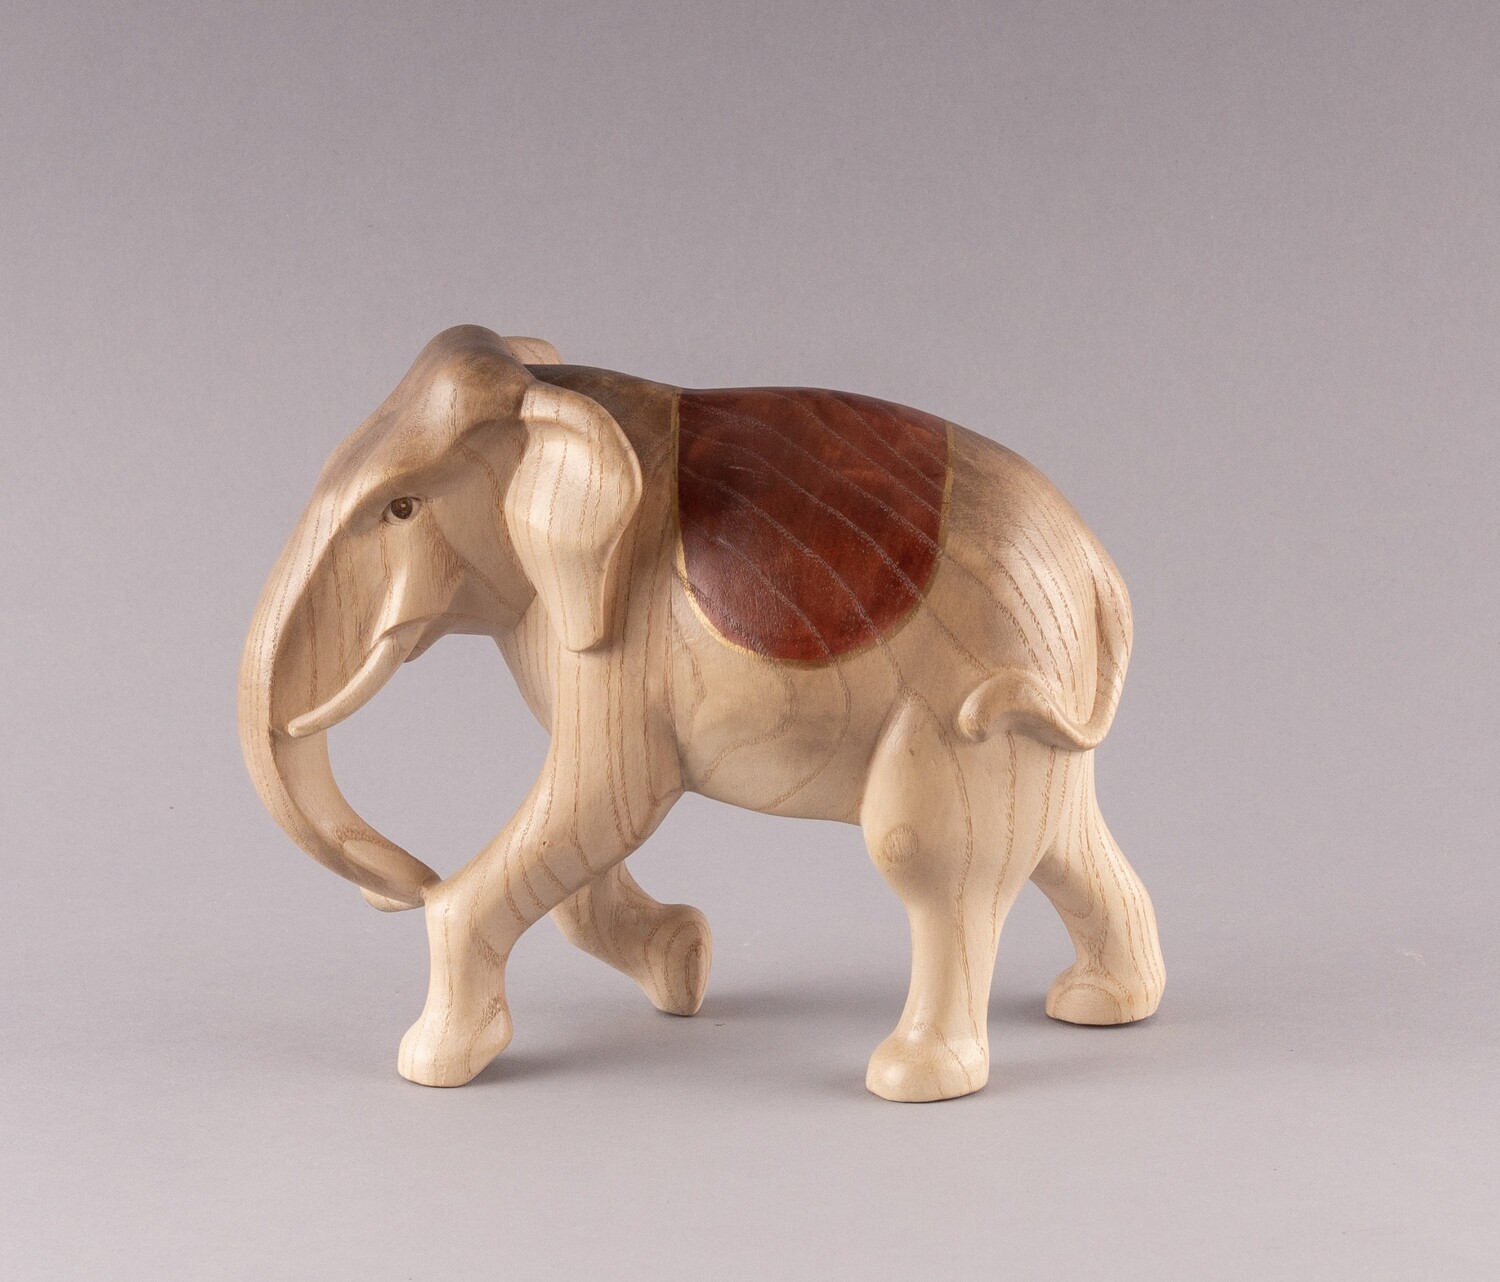 Krippenfigur "Elefant"